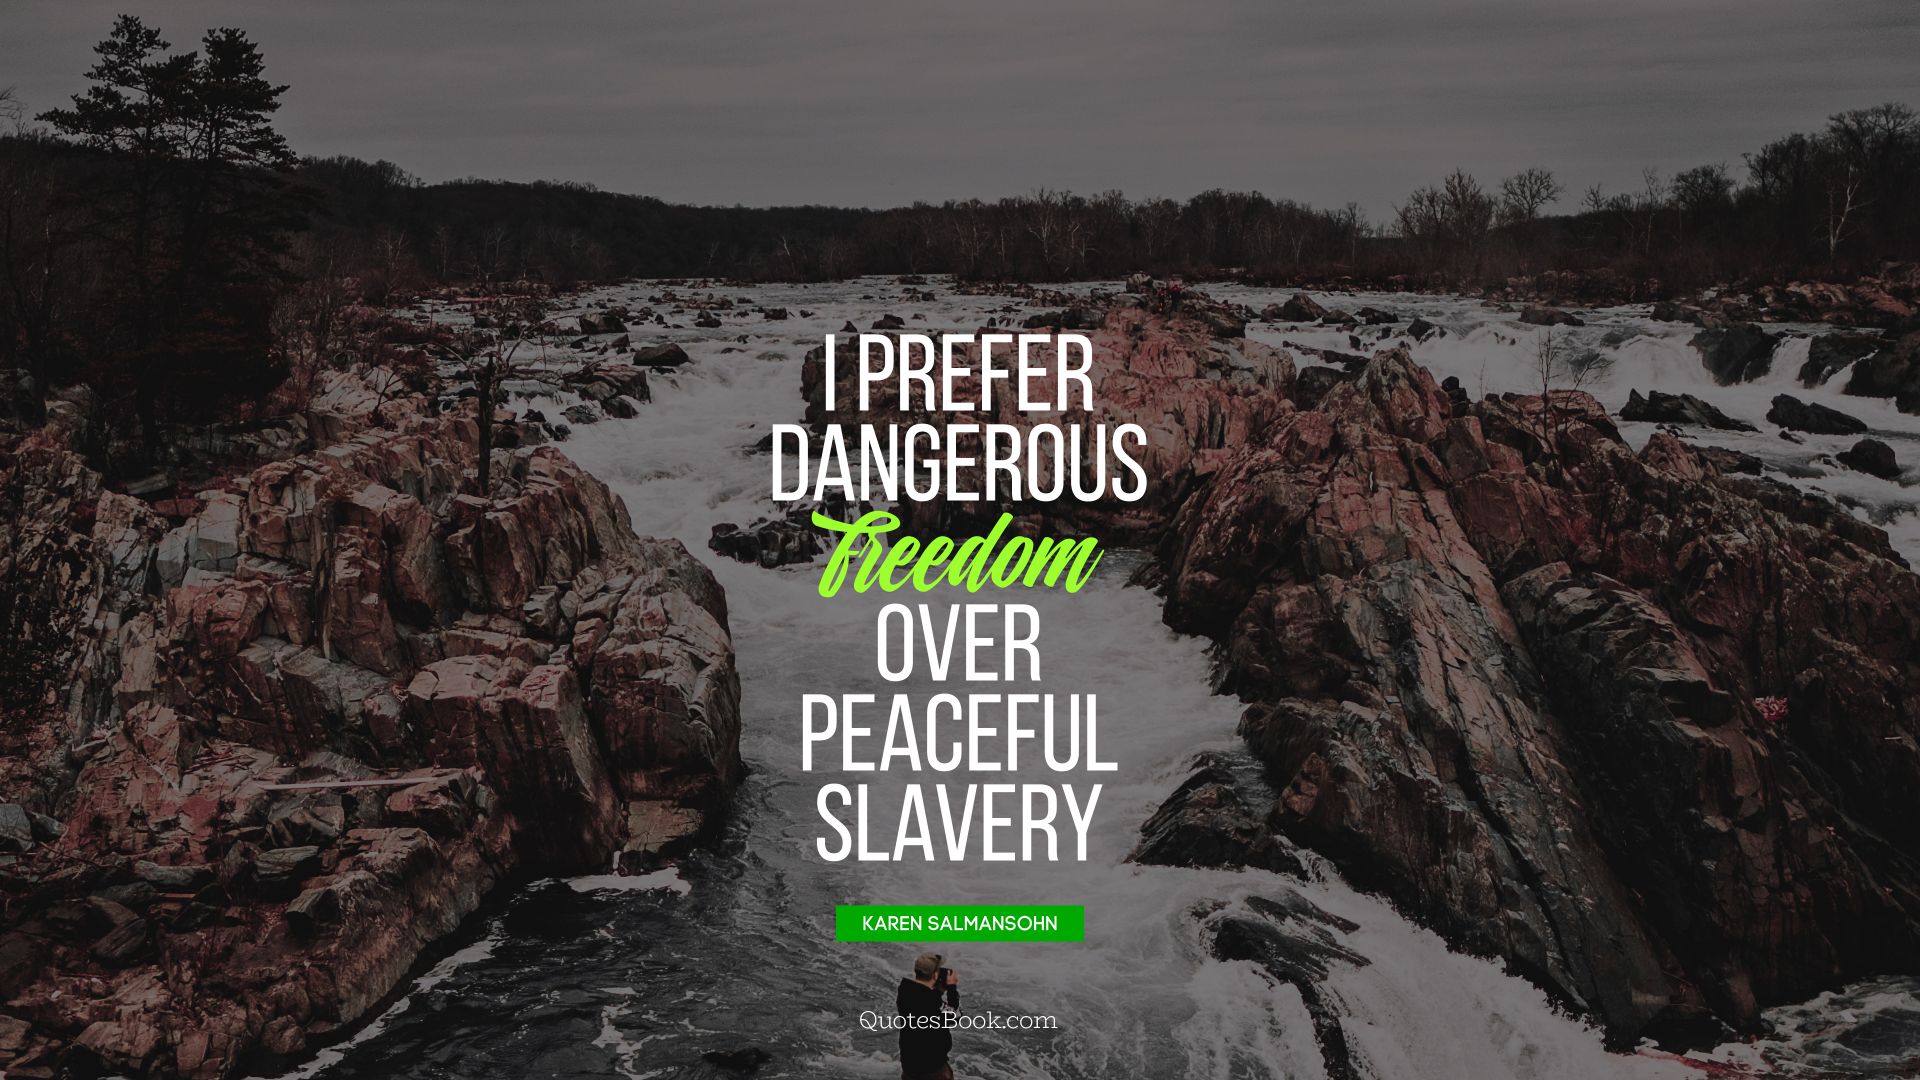 I prefer dangerous freedom over peaceful slavery